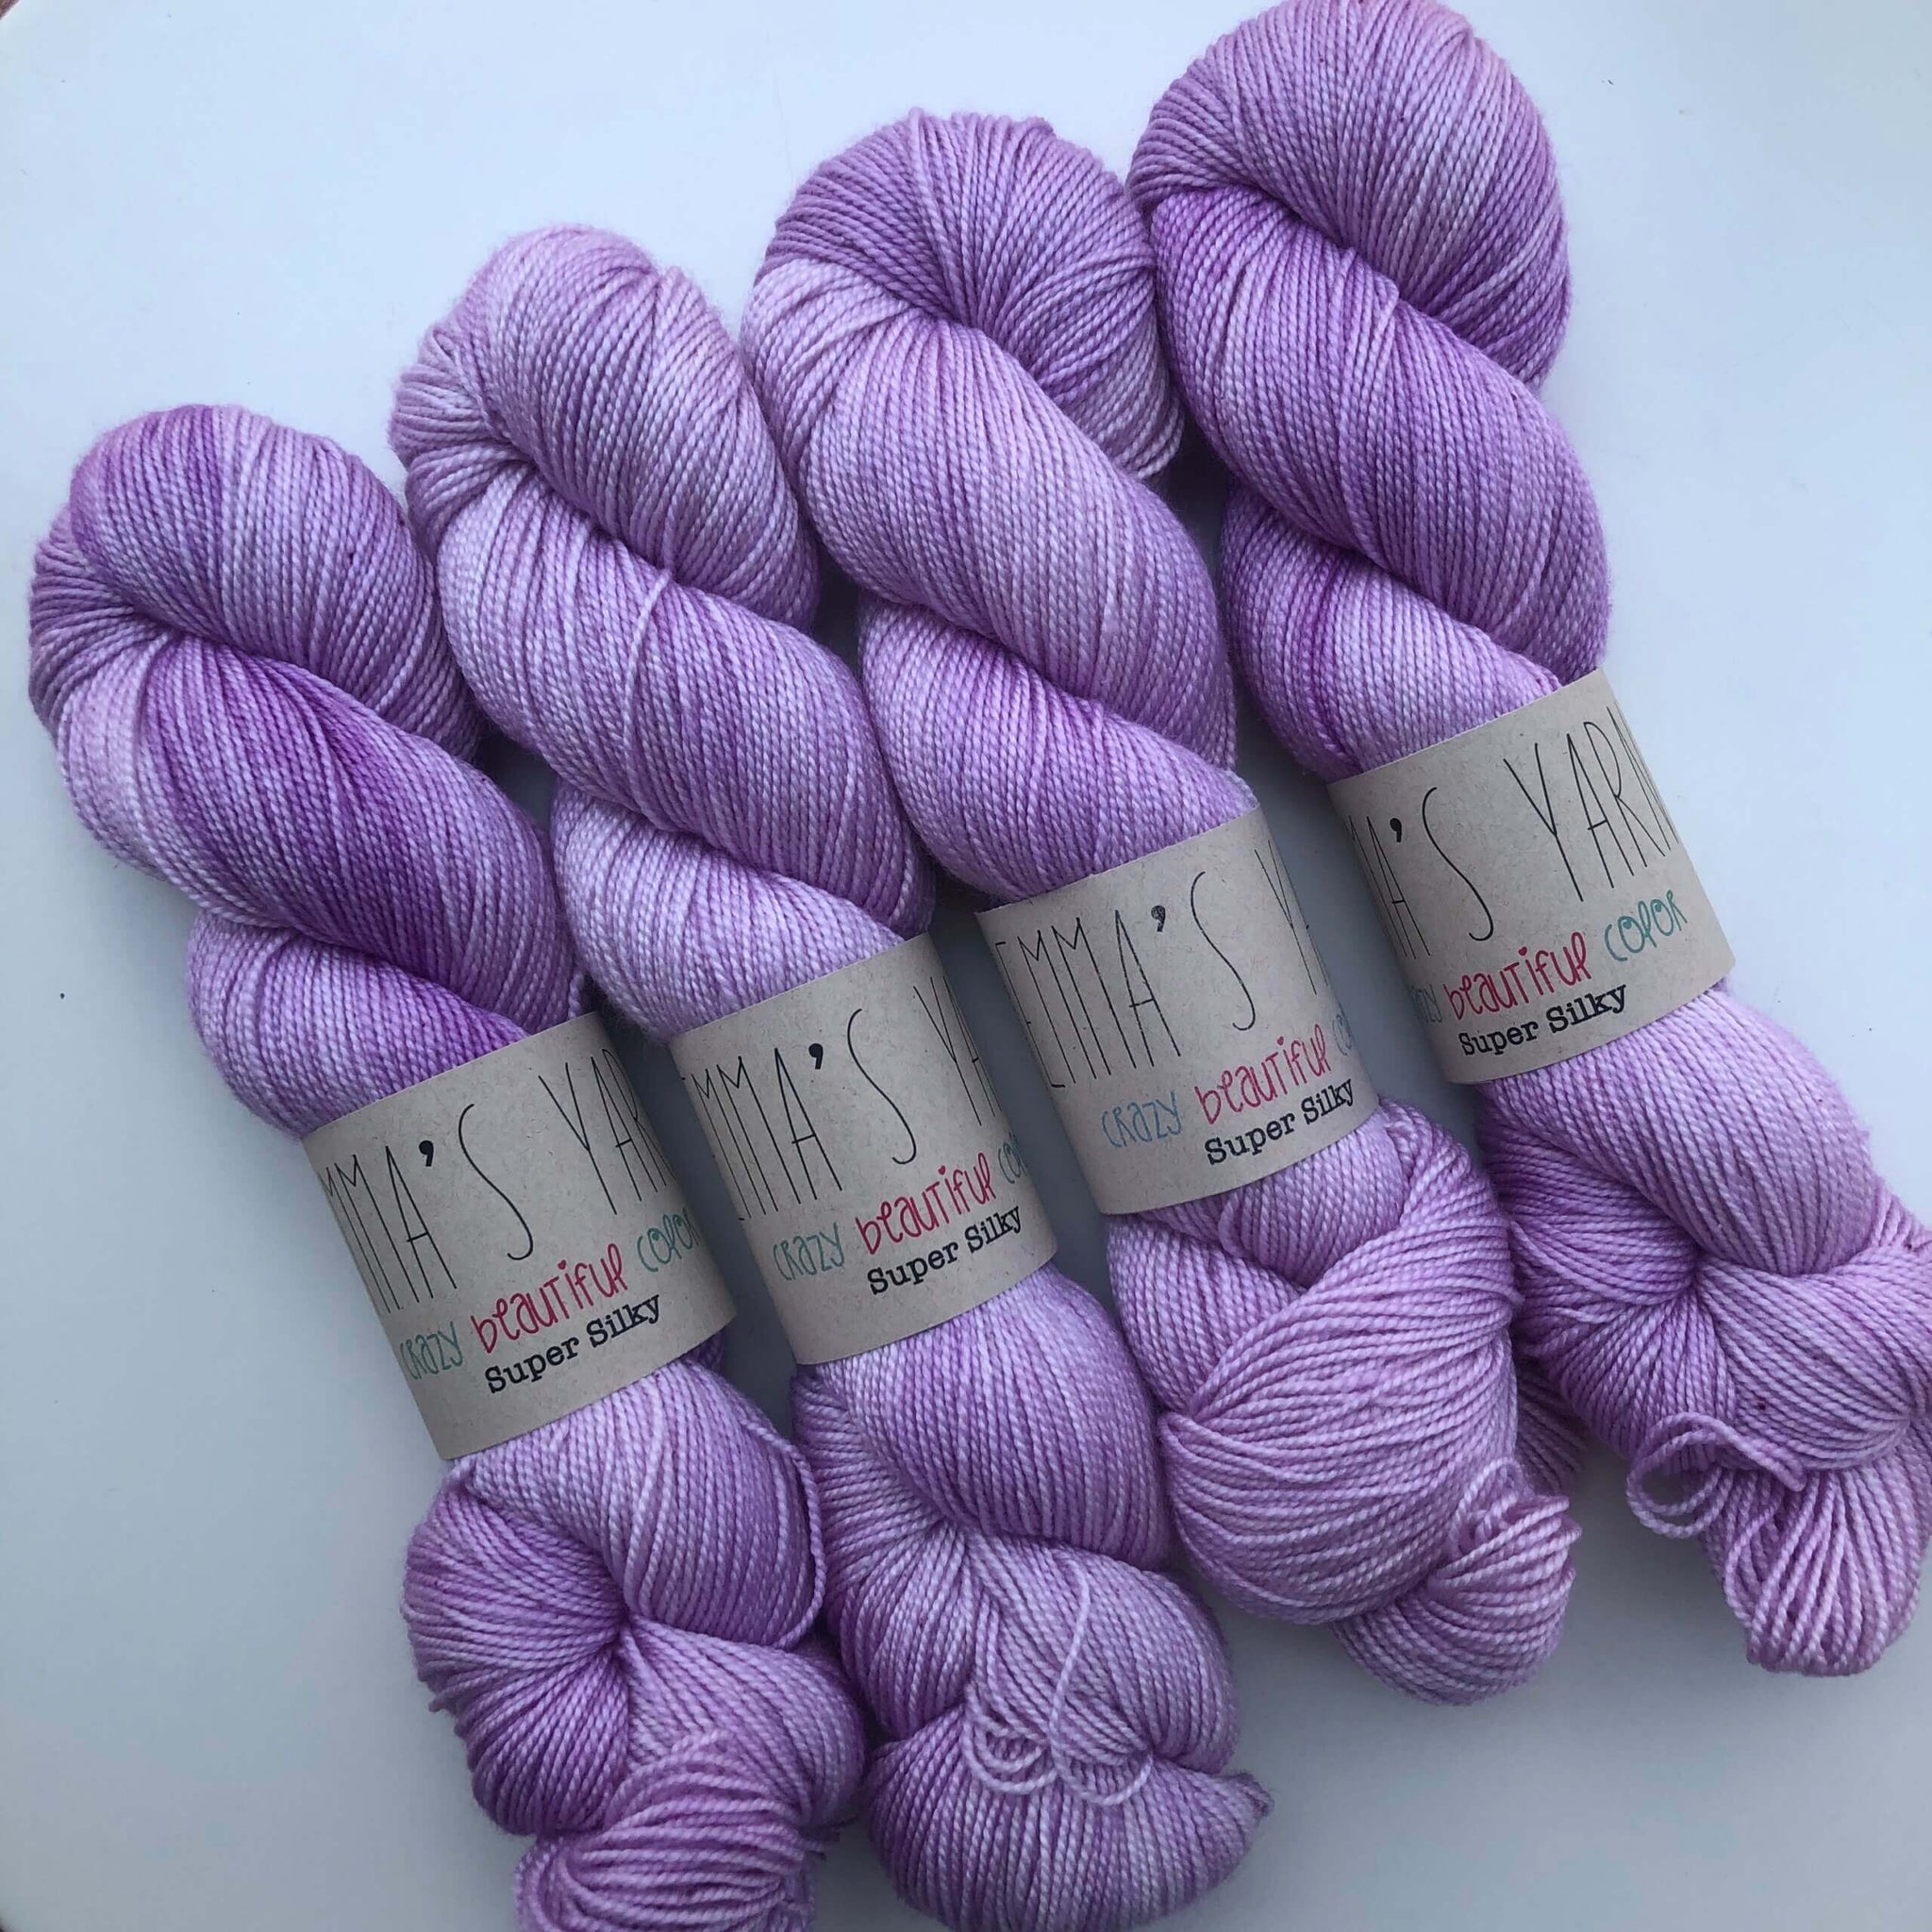 Lady Lavender - Super Silky